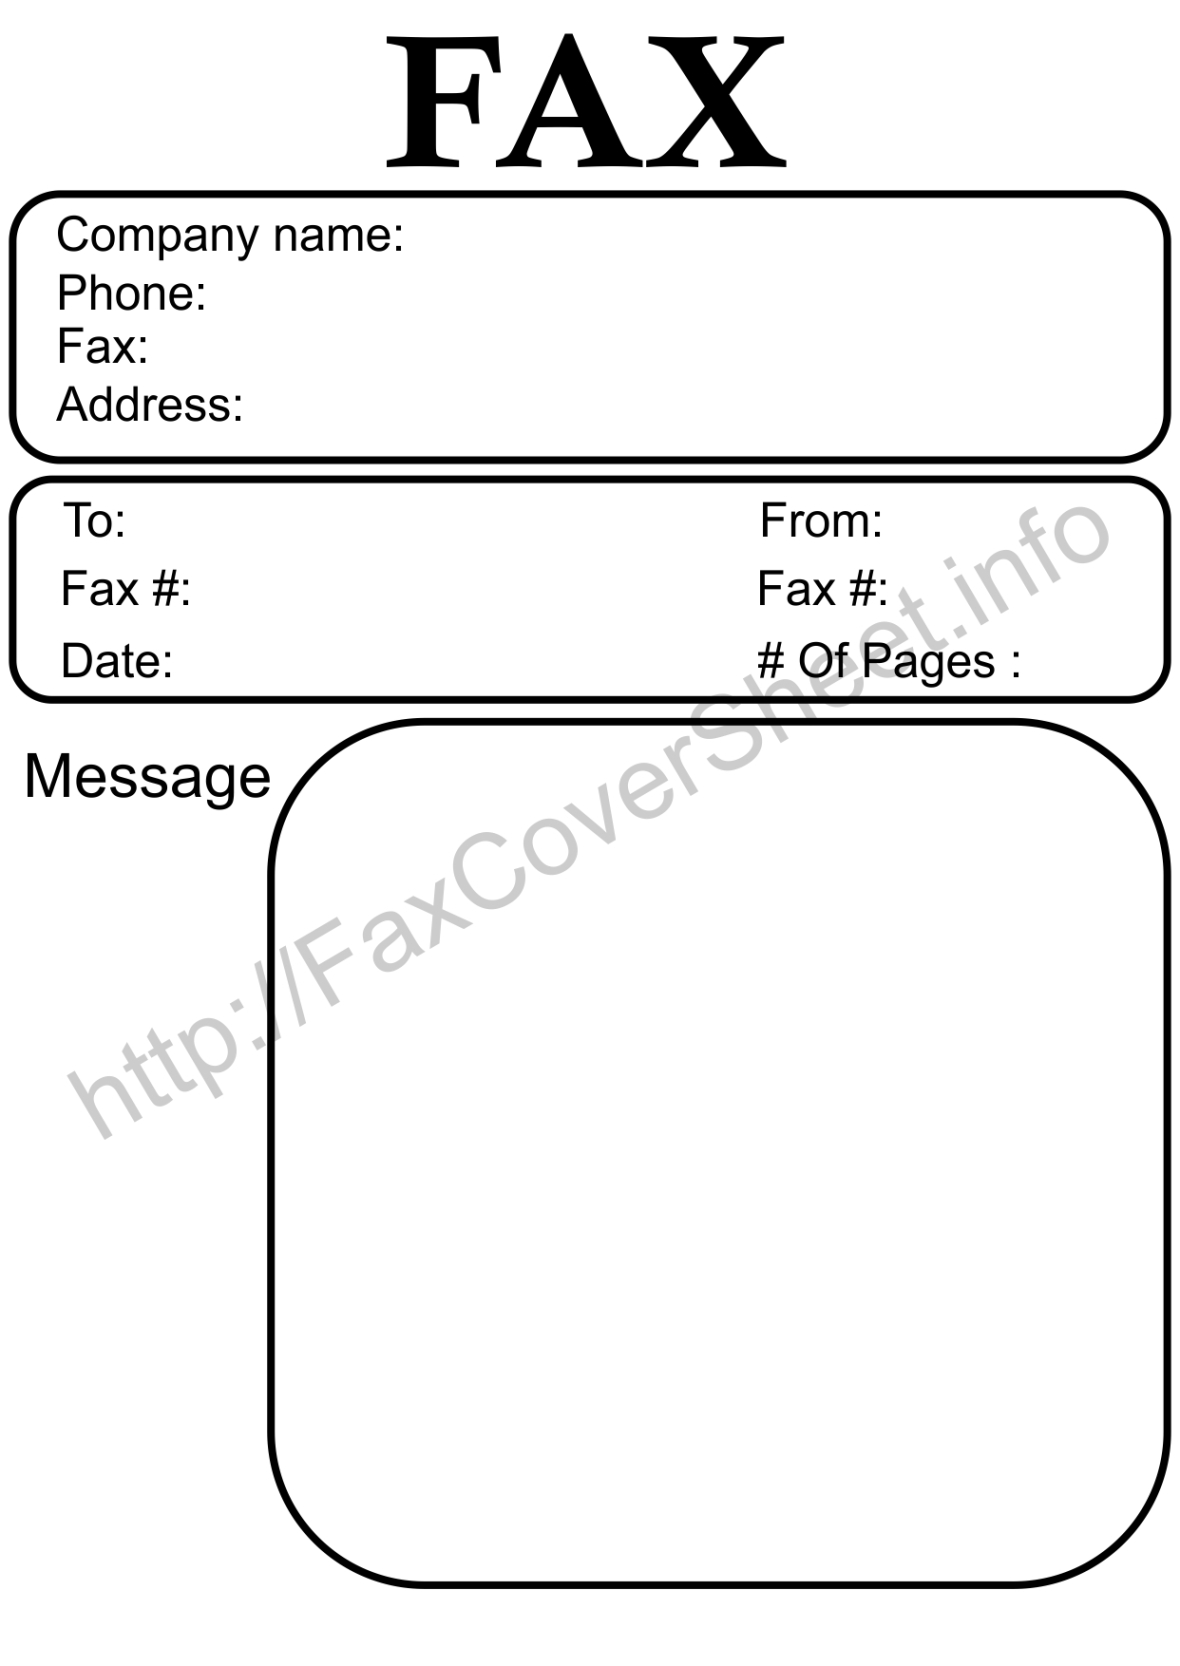 fax cover sheet 5.jpg